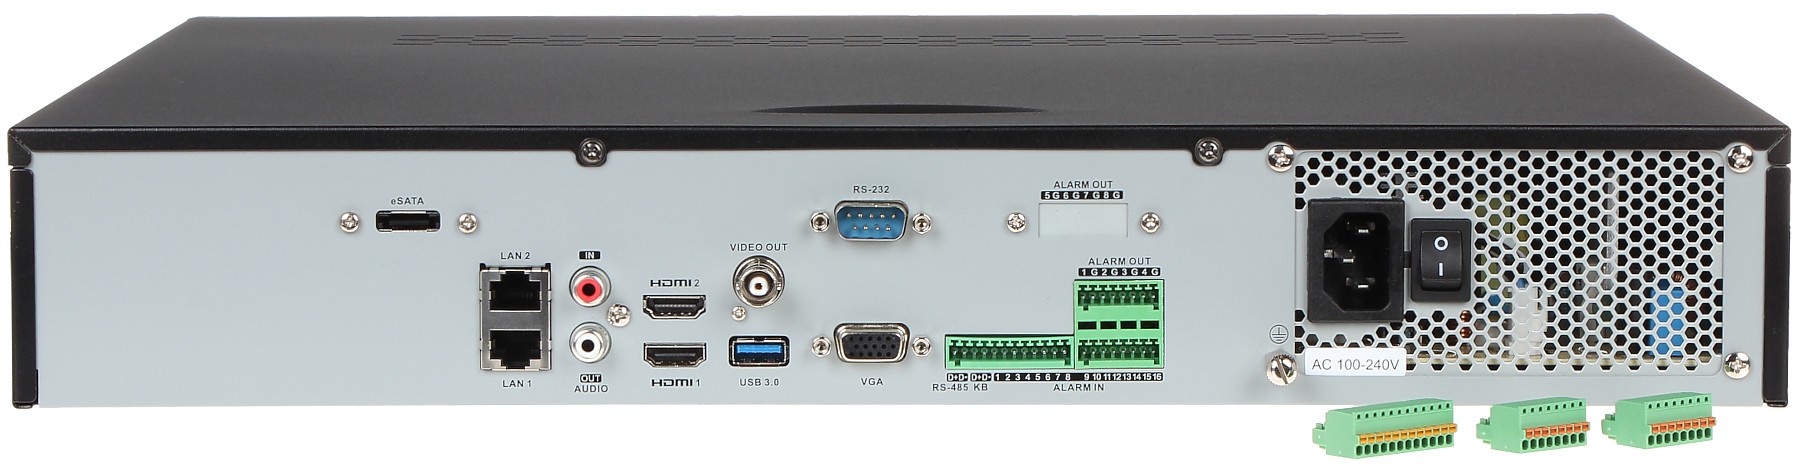 Hik регистратор. DS-7716ni-i4(b). DS-7732nxi-i4. Hikvision DS-7732nxi-i4/s(c). 32-Канальный IP-видеорегистратор Hikvision DS-7732ni-k4/16p.